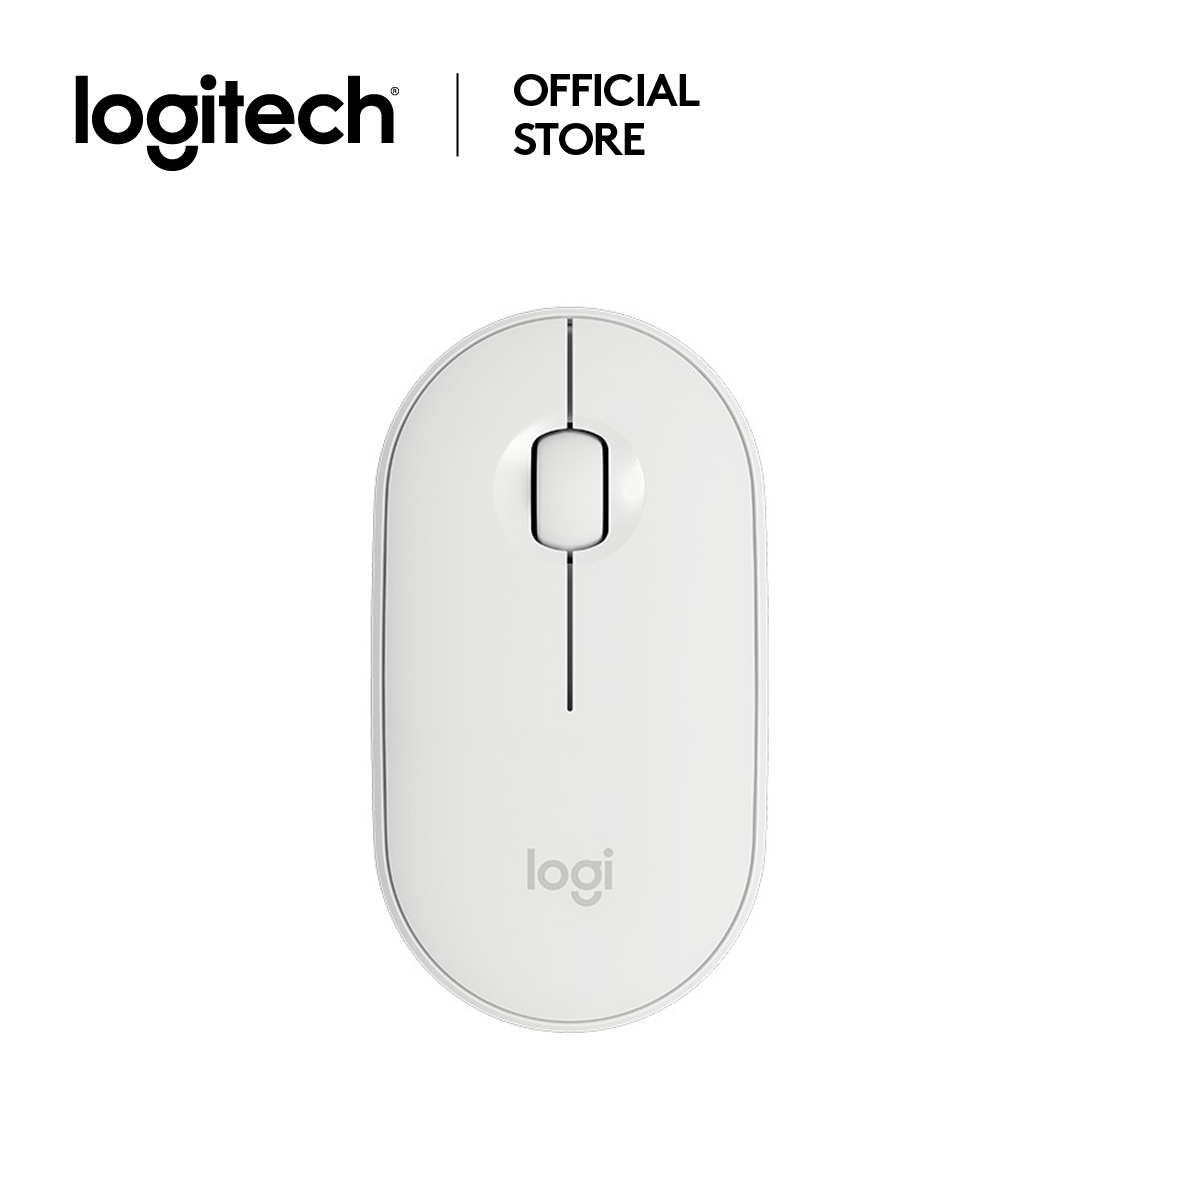 Logitech Pebble M350 Wireless Mouse ระยะการเชื่อมต่อไร้สาย 10 เมตร, DPI 1000, เทคโนโลยี Bluetooth พลังงานต่ำ, port USB  (M350-WIRELESS-MS) ( เมาส์)